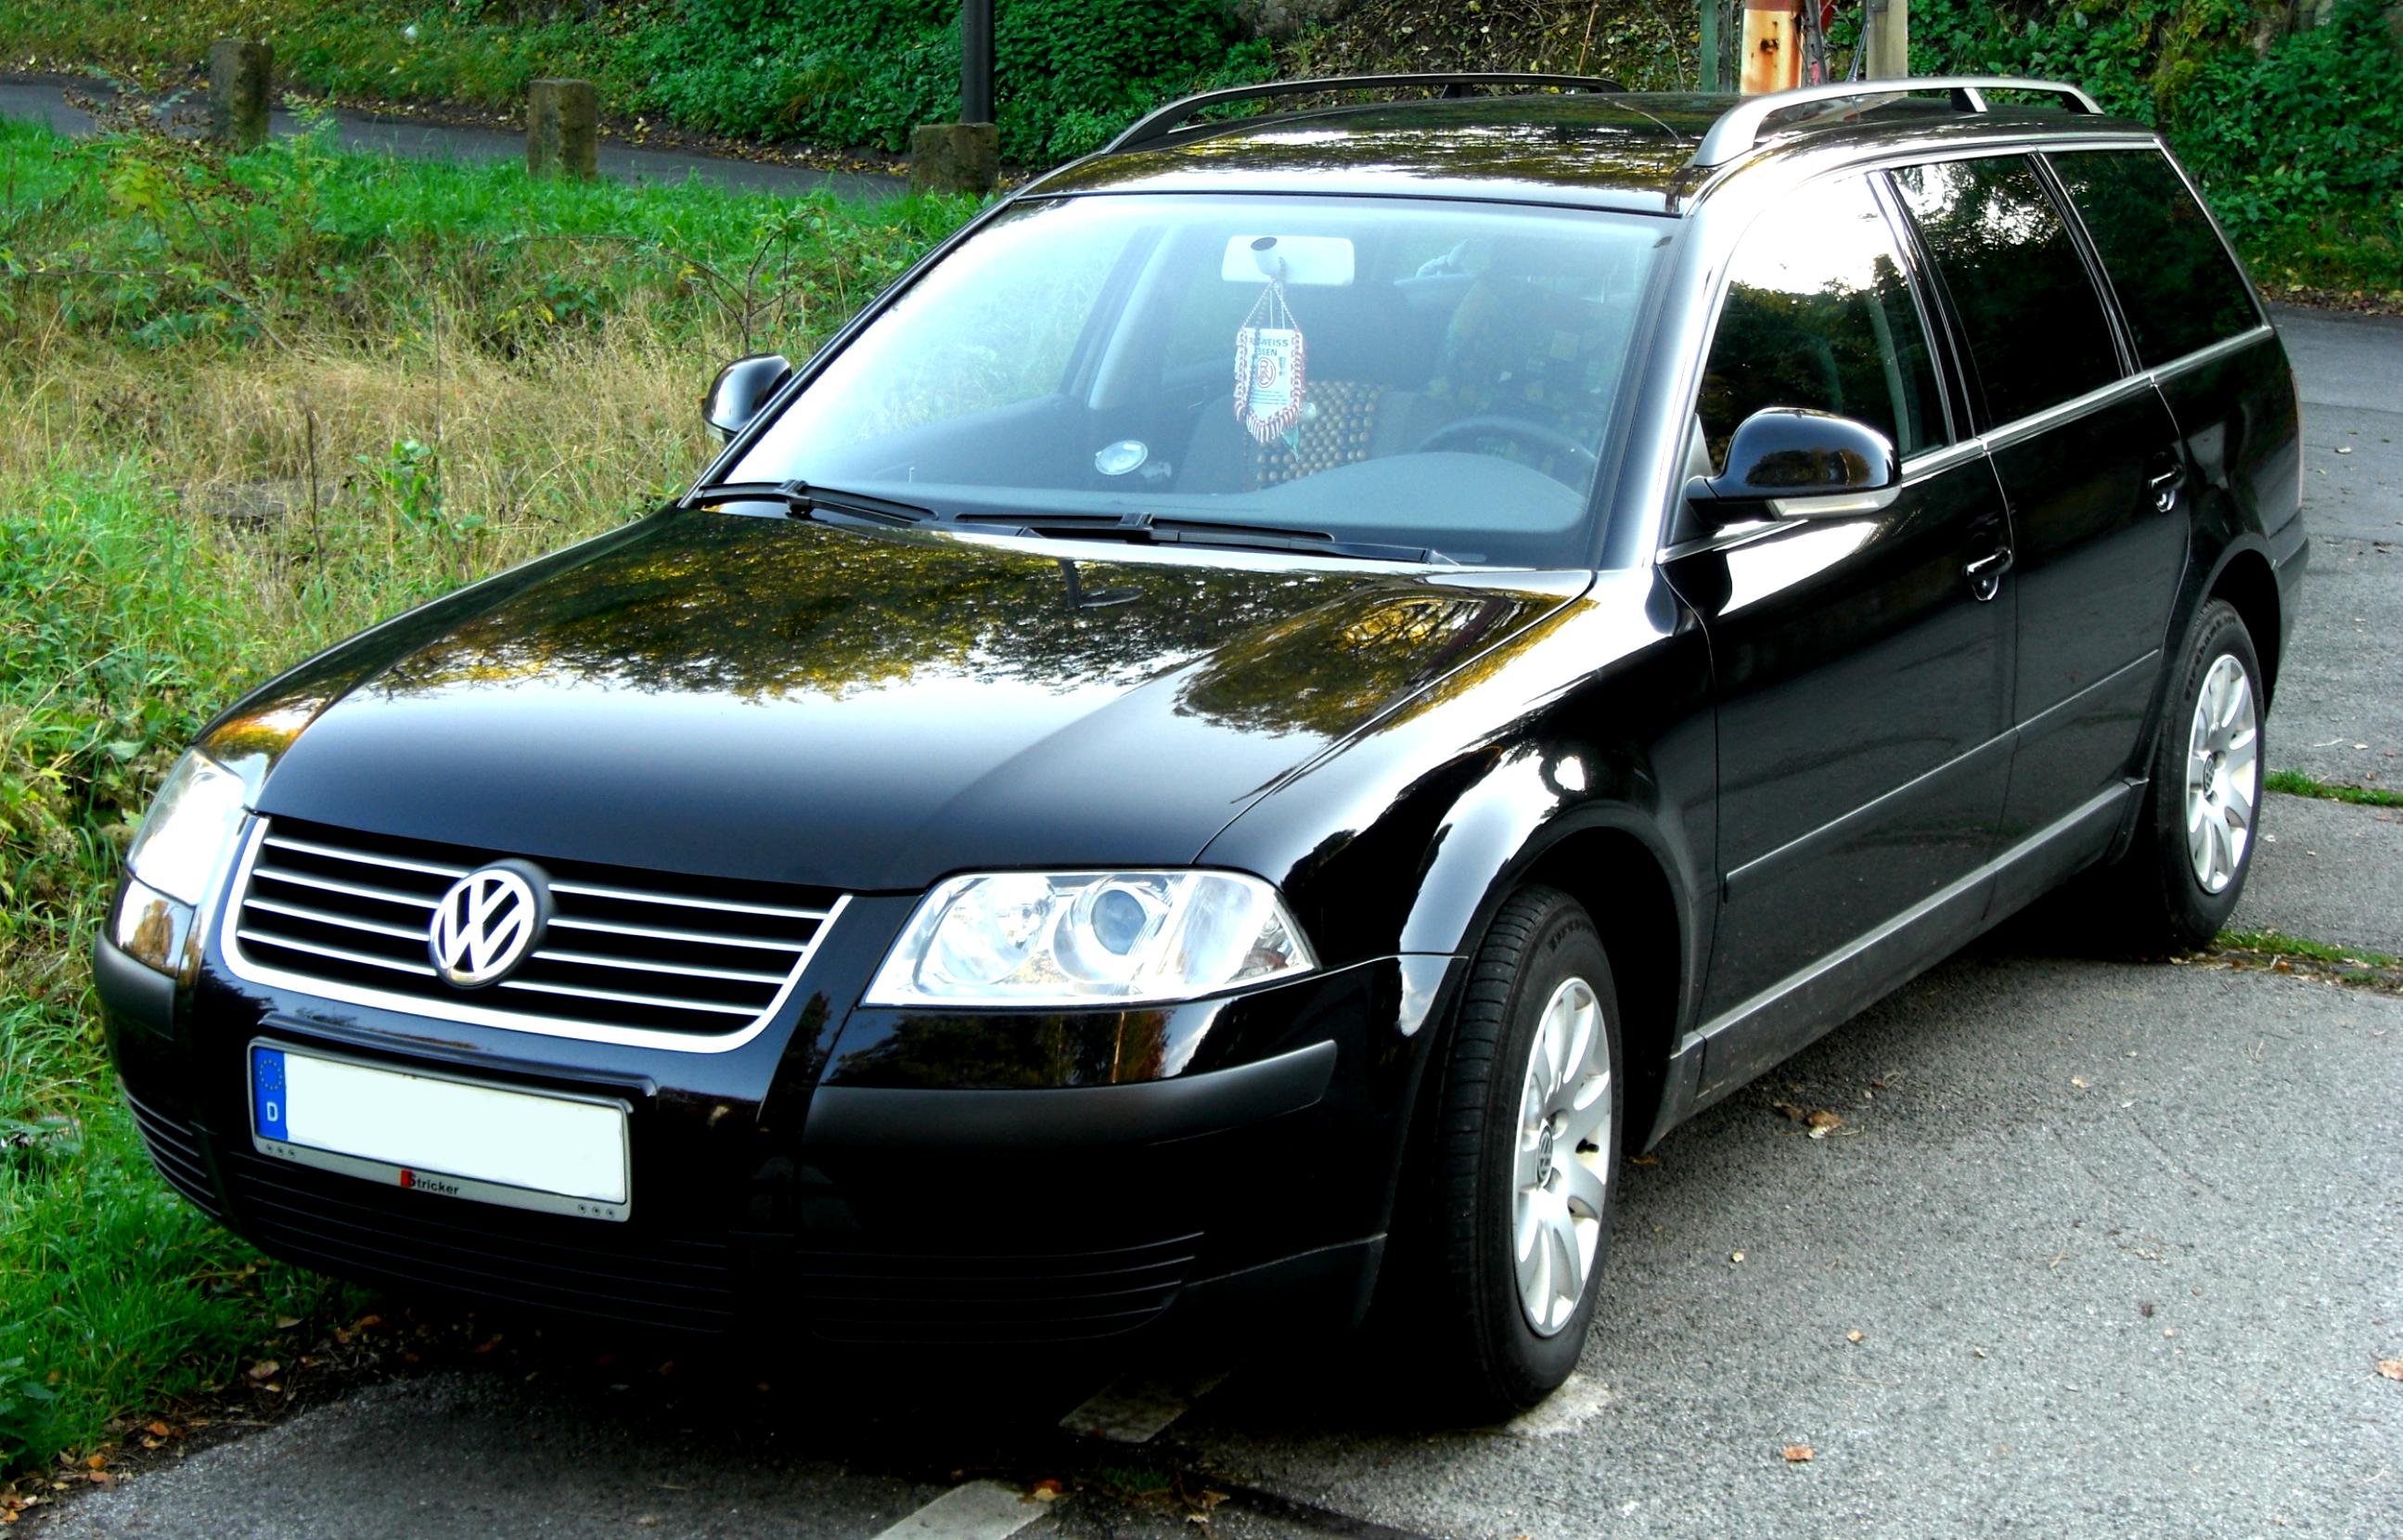 Купить б5 беларусь. Volkswagen Passat b5 variant. VW Passat b5 2003. Volkswagen Passat b5 2003 универсал. Volkswagen Passat b5 универсал дорестайлинг.